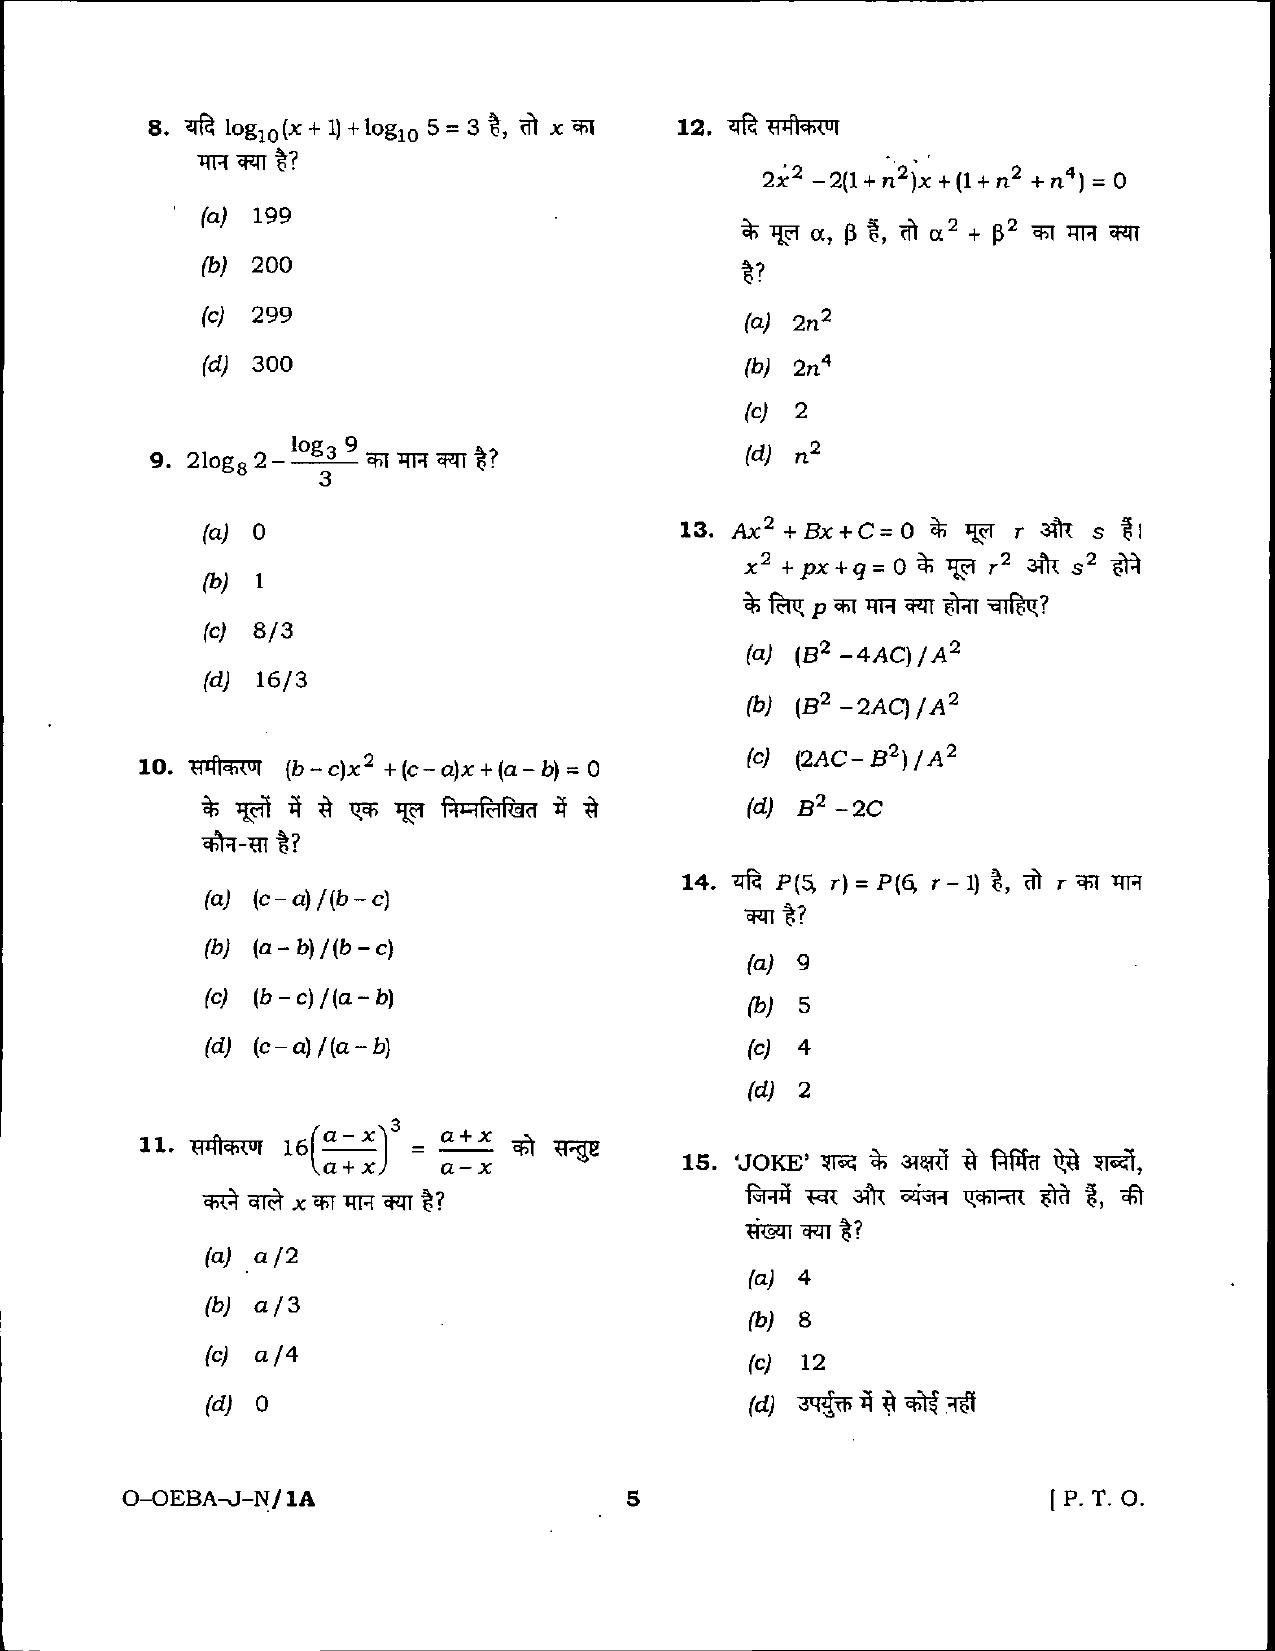 Odisha Junior Clerk Question Paper - General Mathematics - Page 5